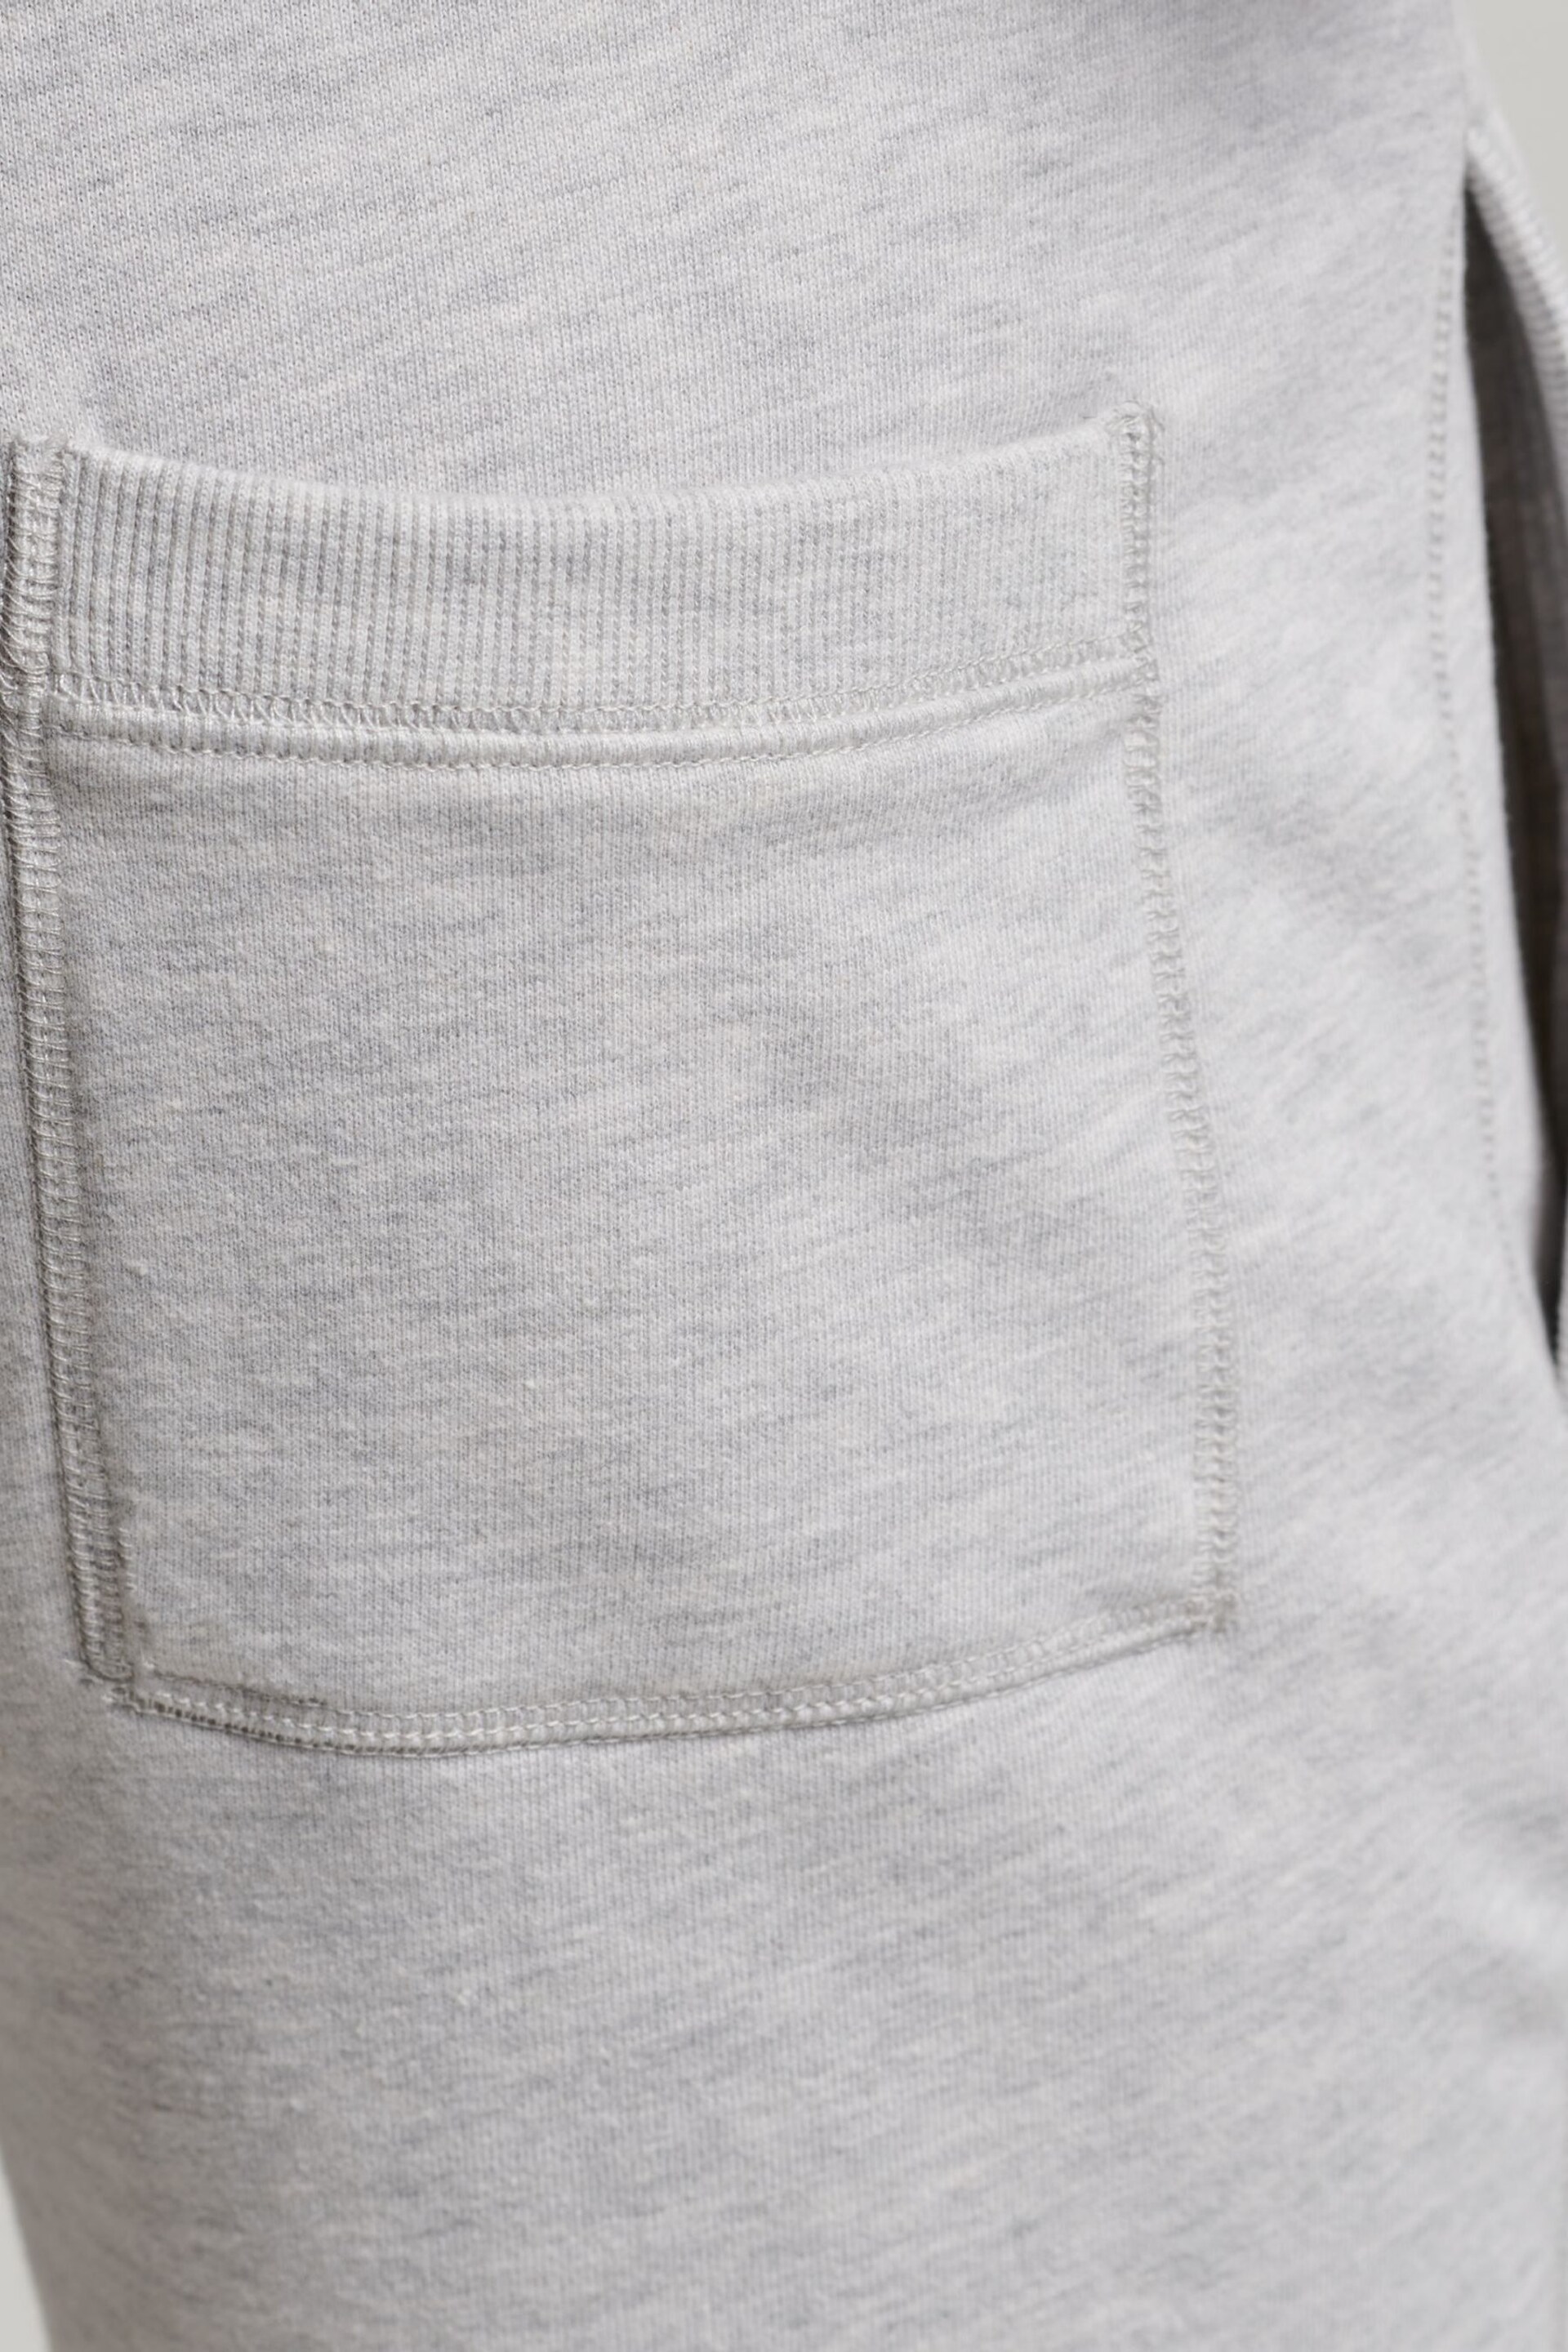 Superdry Light Grey Vintage Logo Embroidered Jersey Shorts - Image 7 of 8